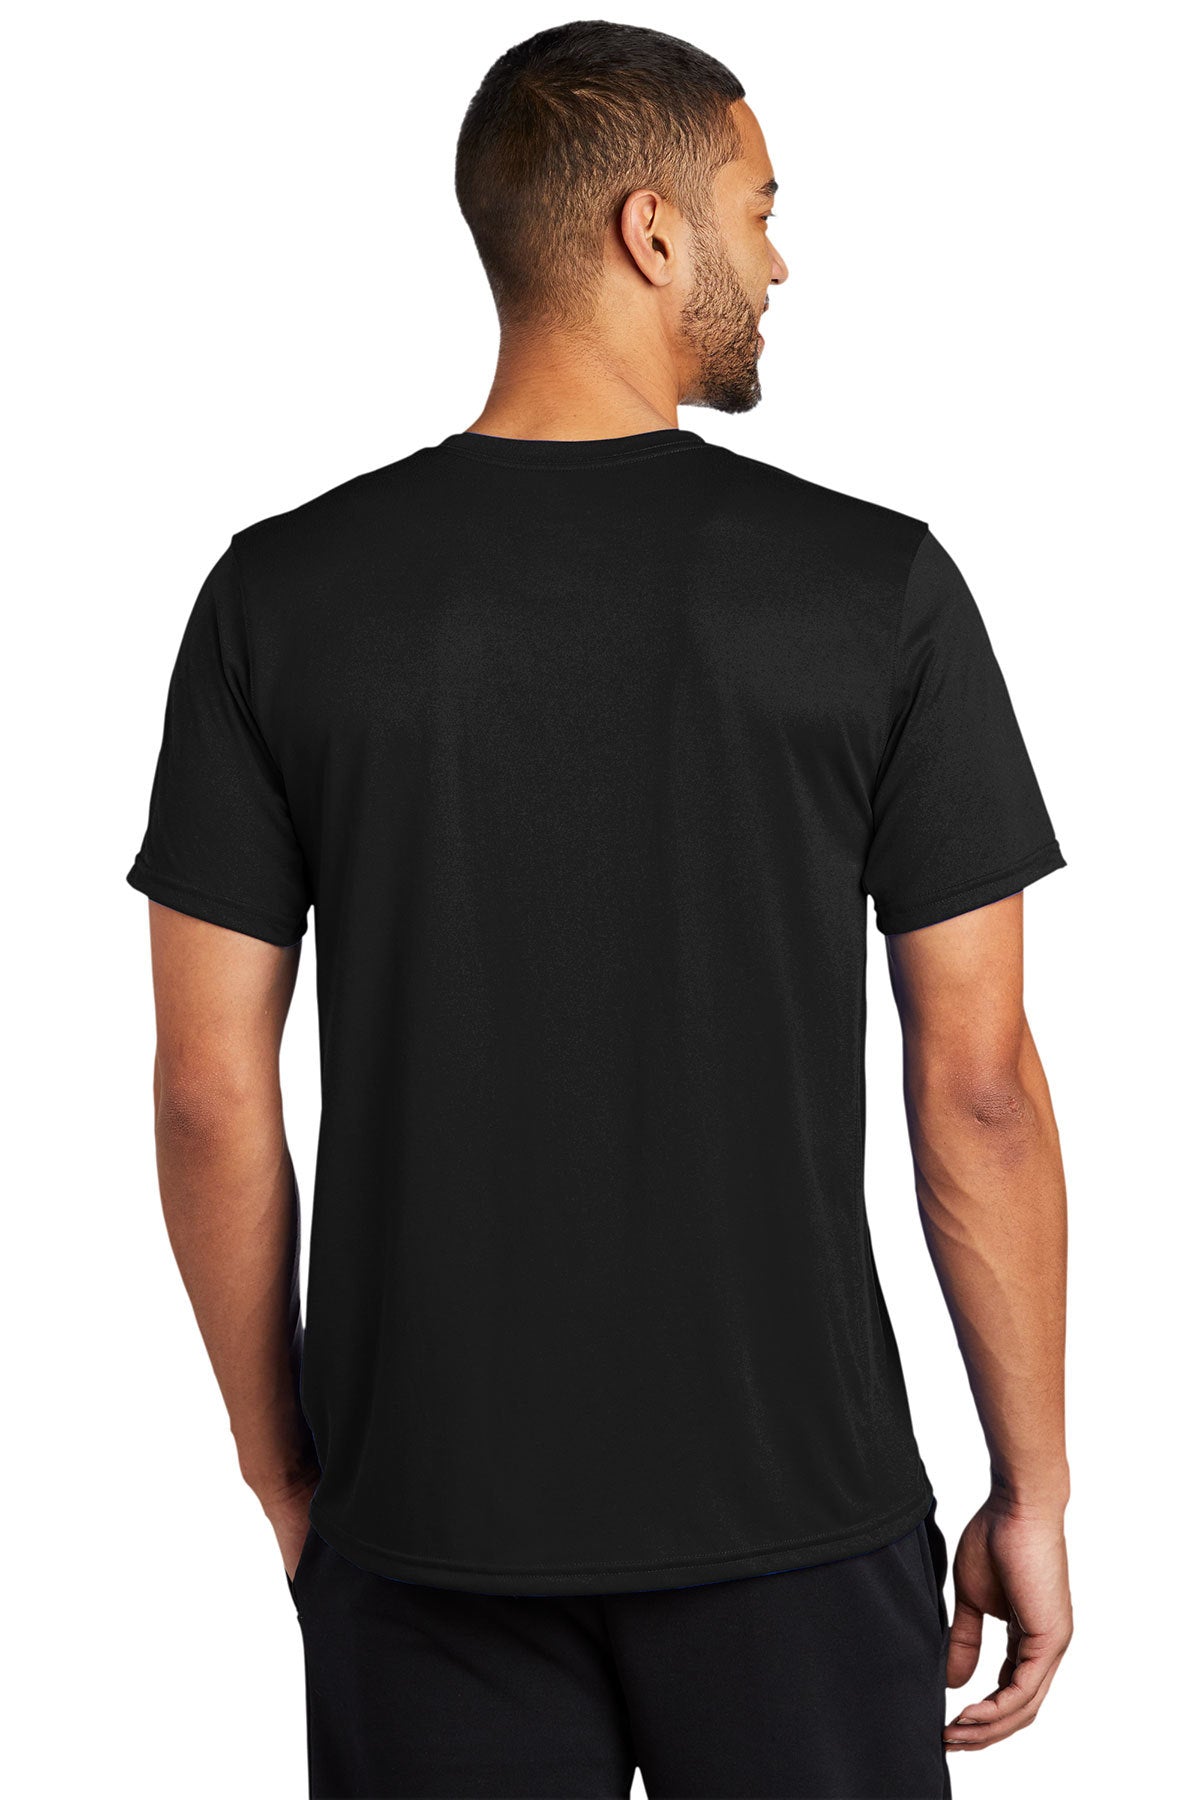 Nike Legend Customized T-Shirts, Black